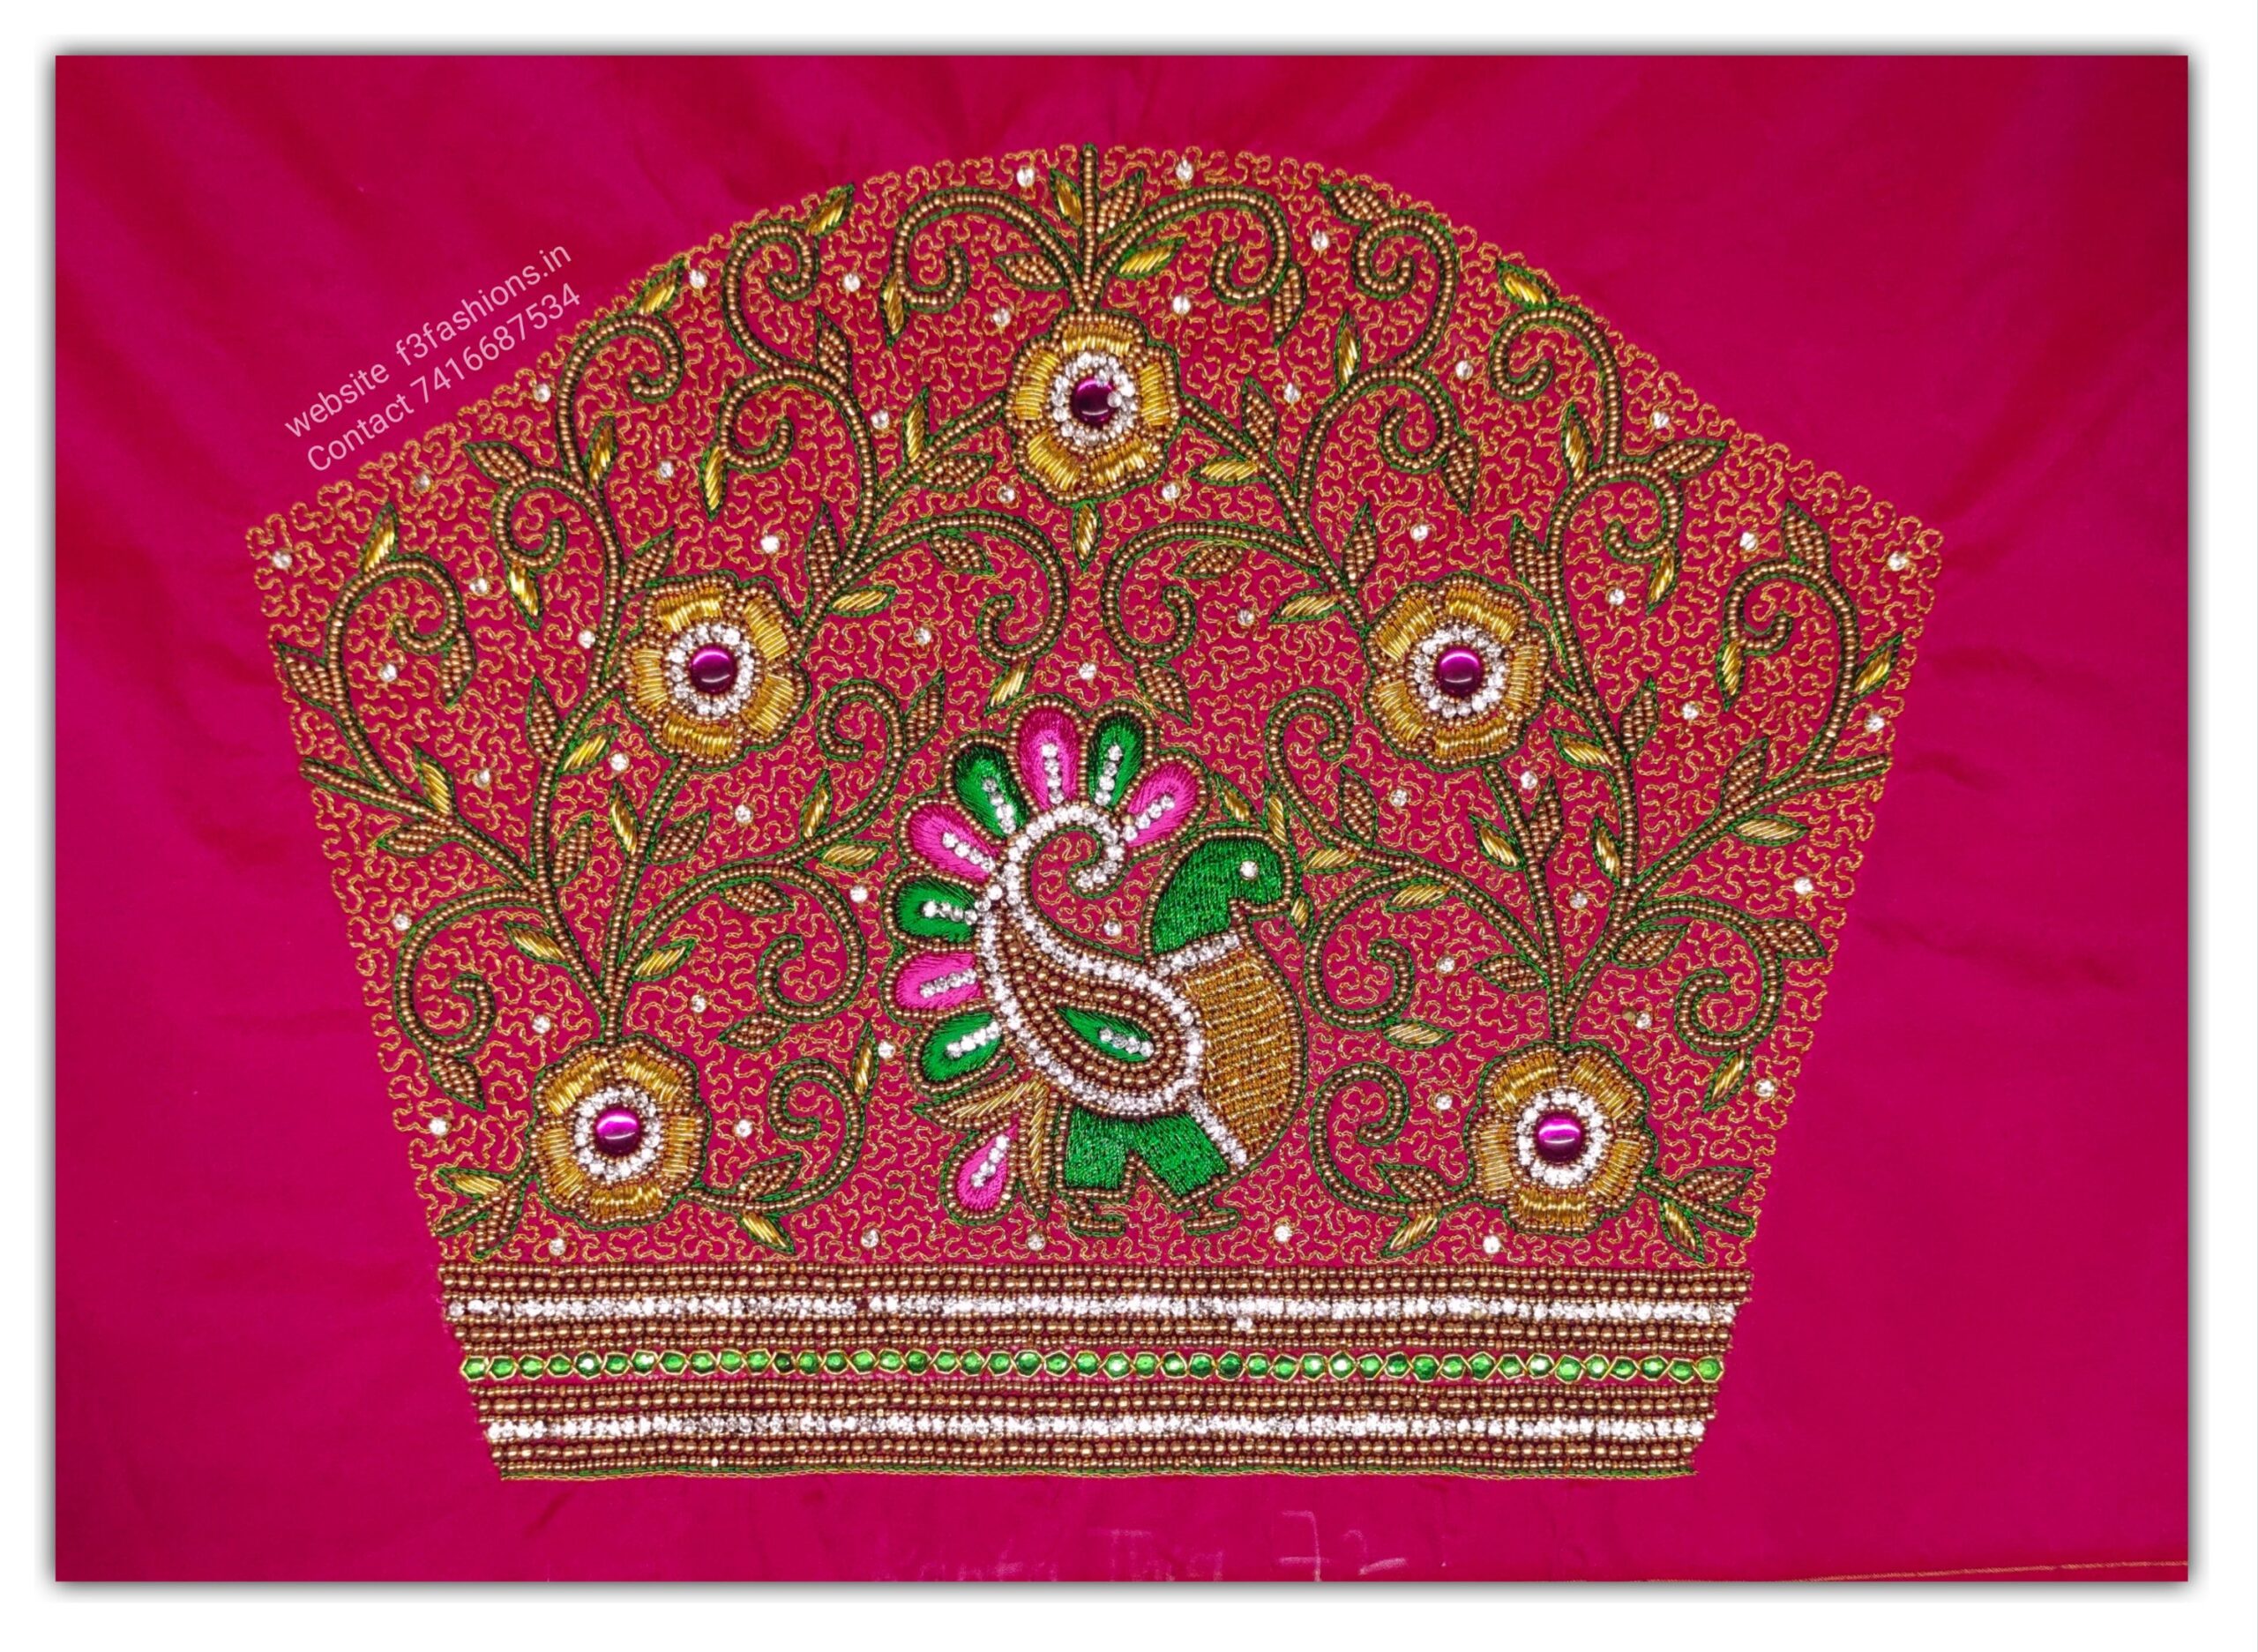 Latest Aari Work Blouse Designs Images for Silk Sarees 2021